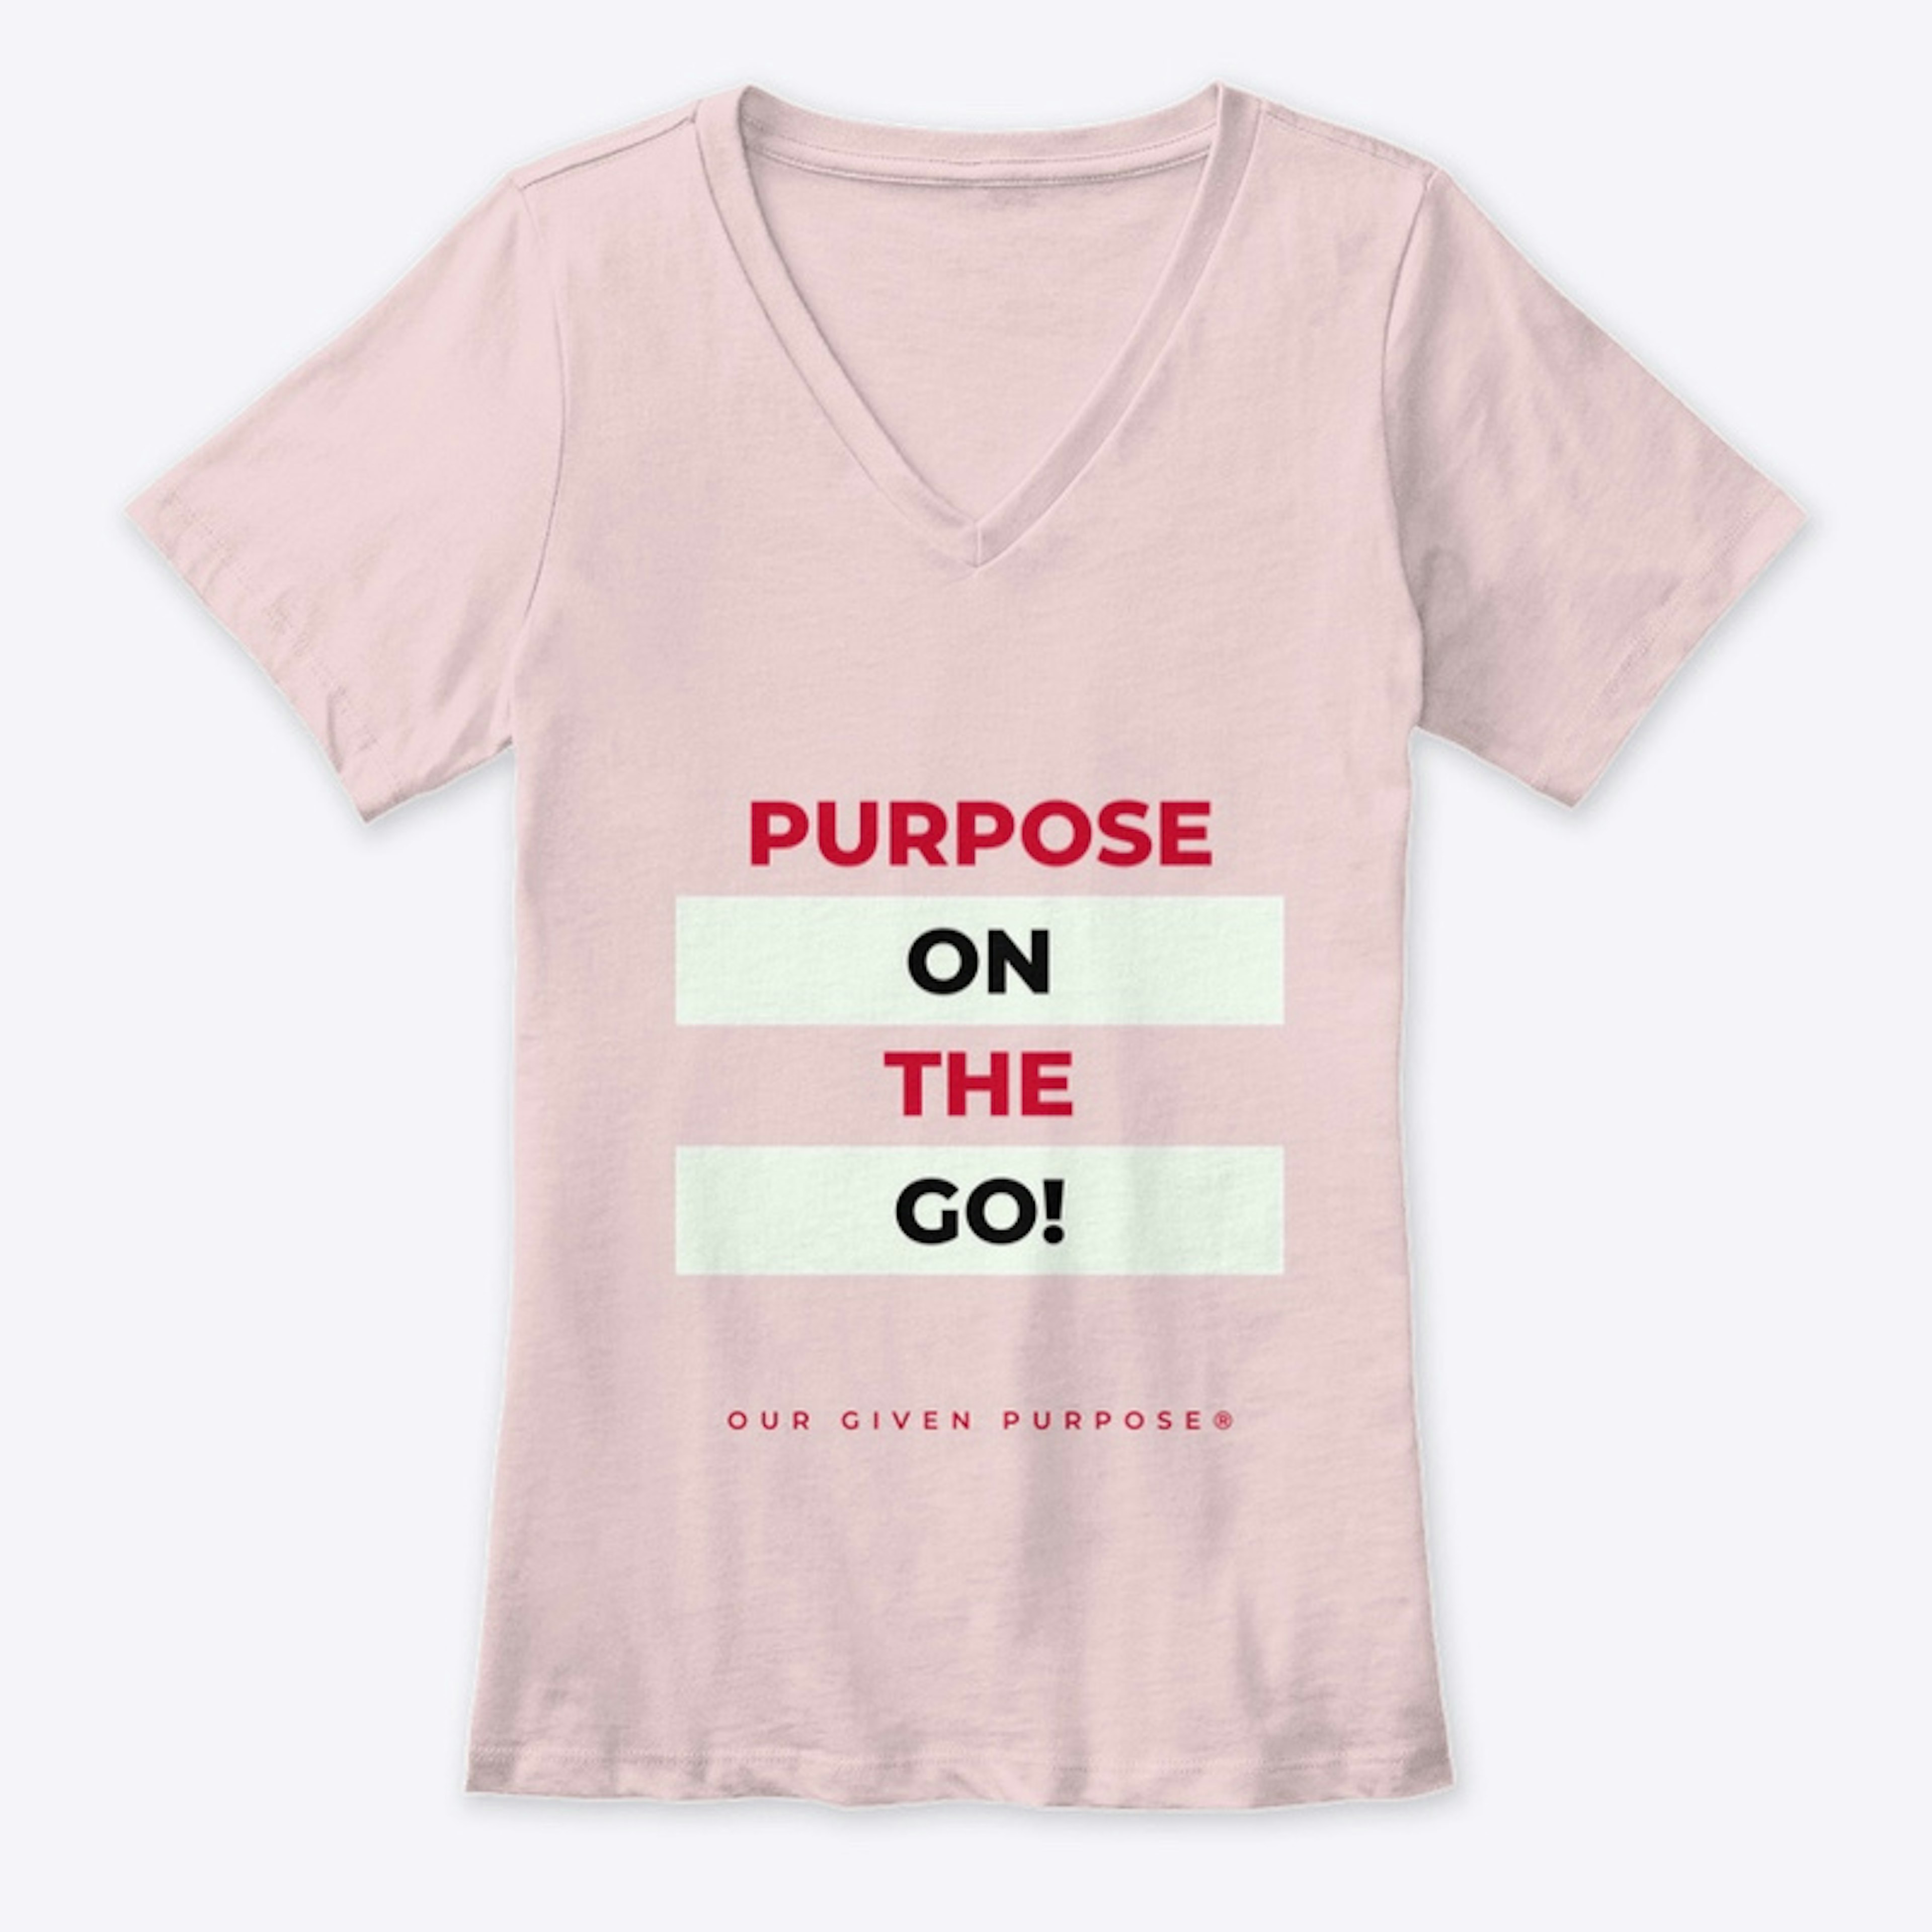 Purpose on the Go!